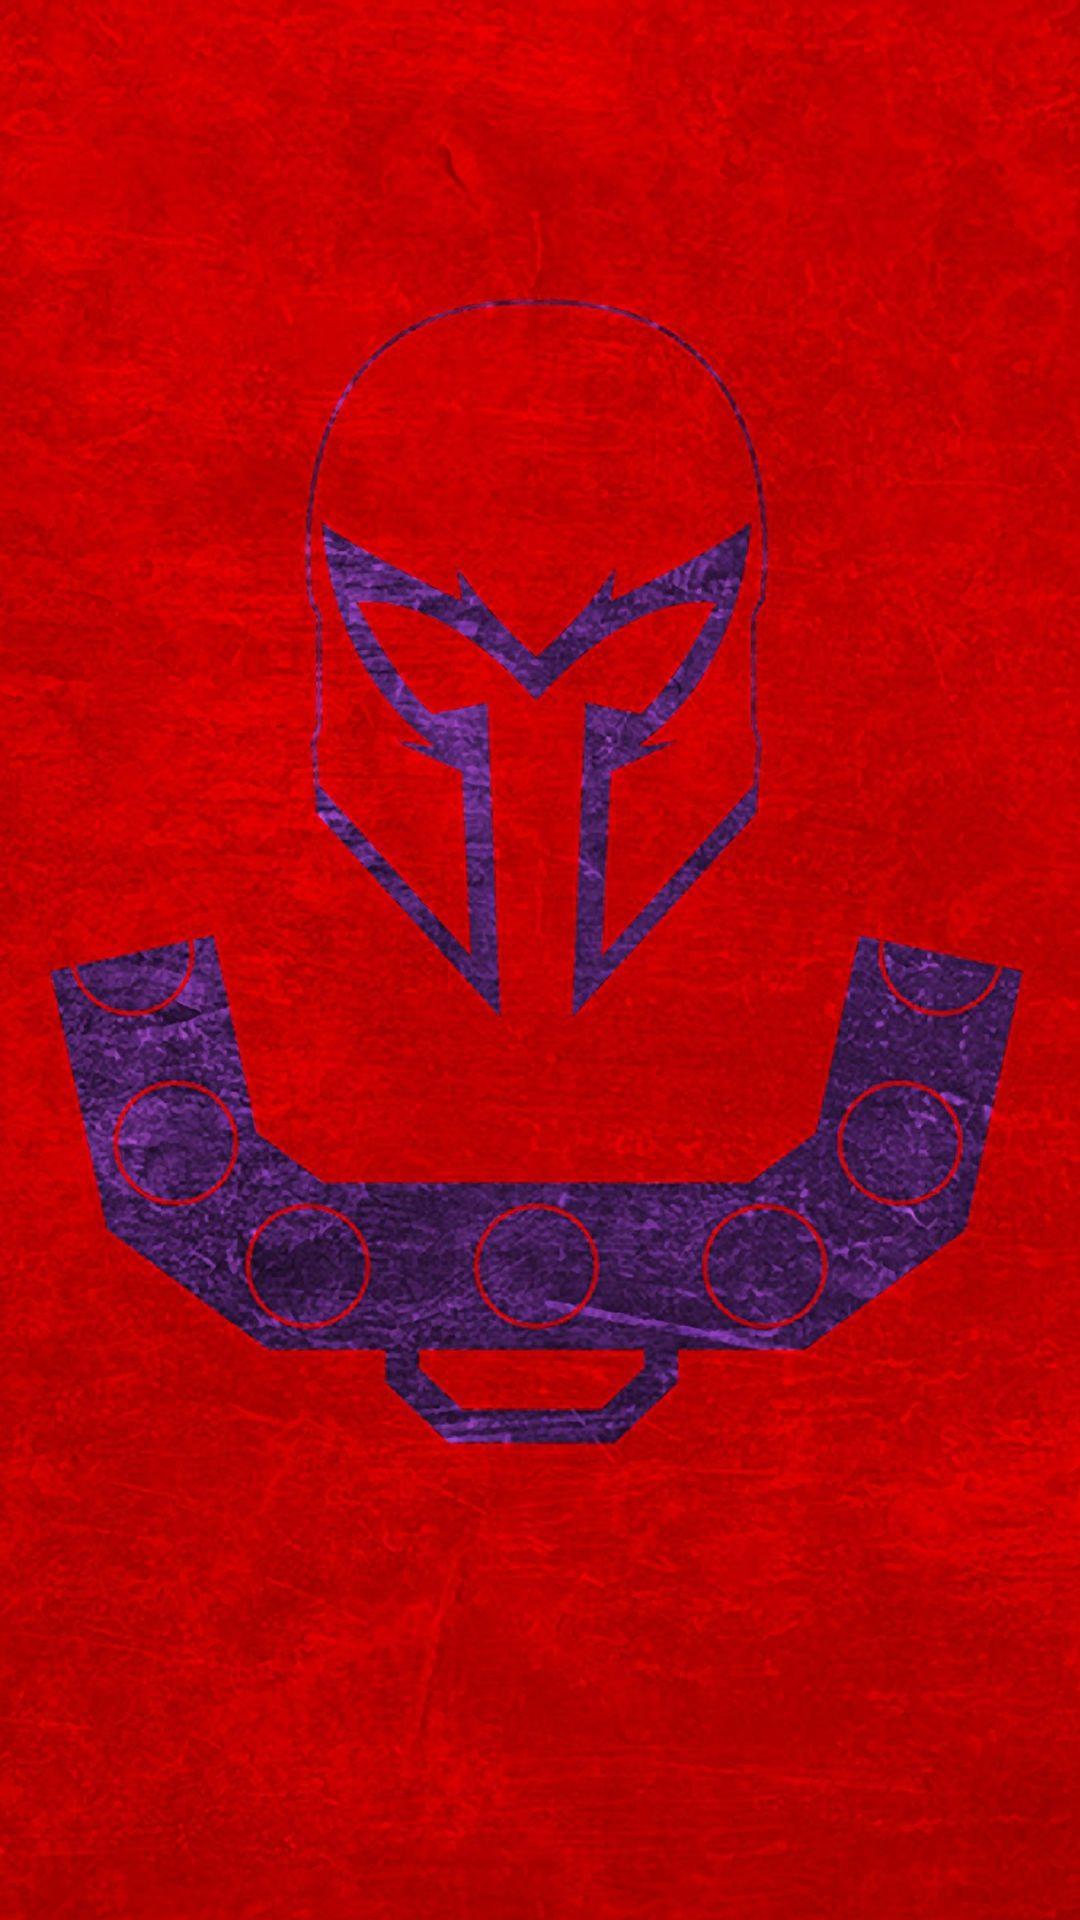 V.771: Magneto Wallpaper, HD Image of Magneto, Ultra HD 4K Magneto